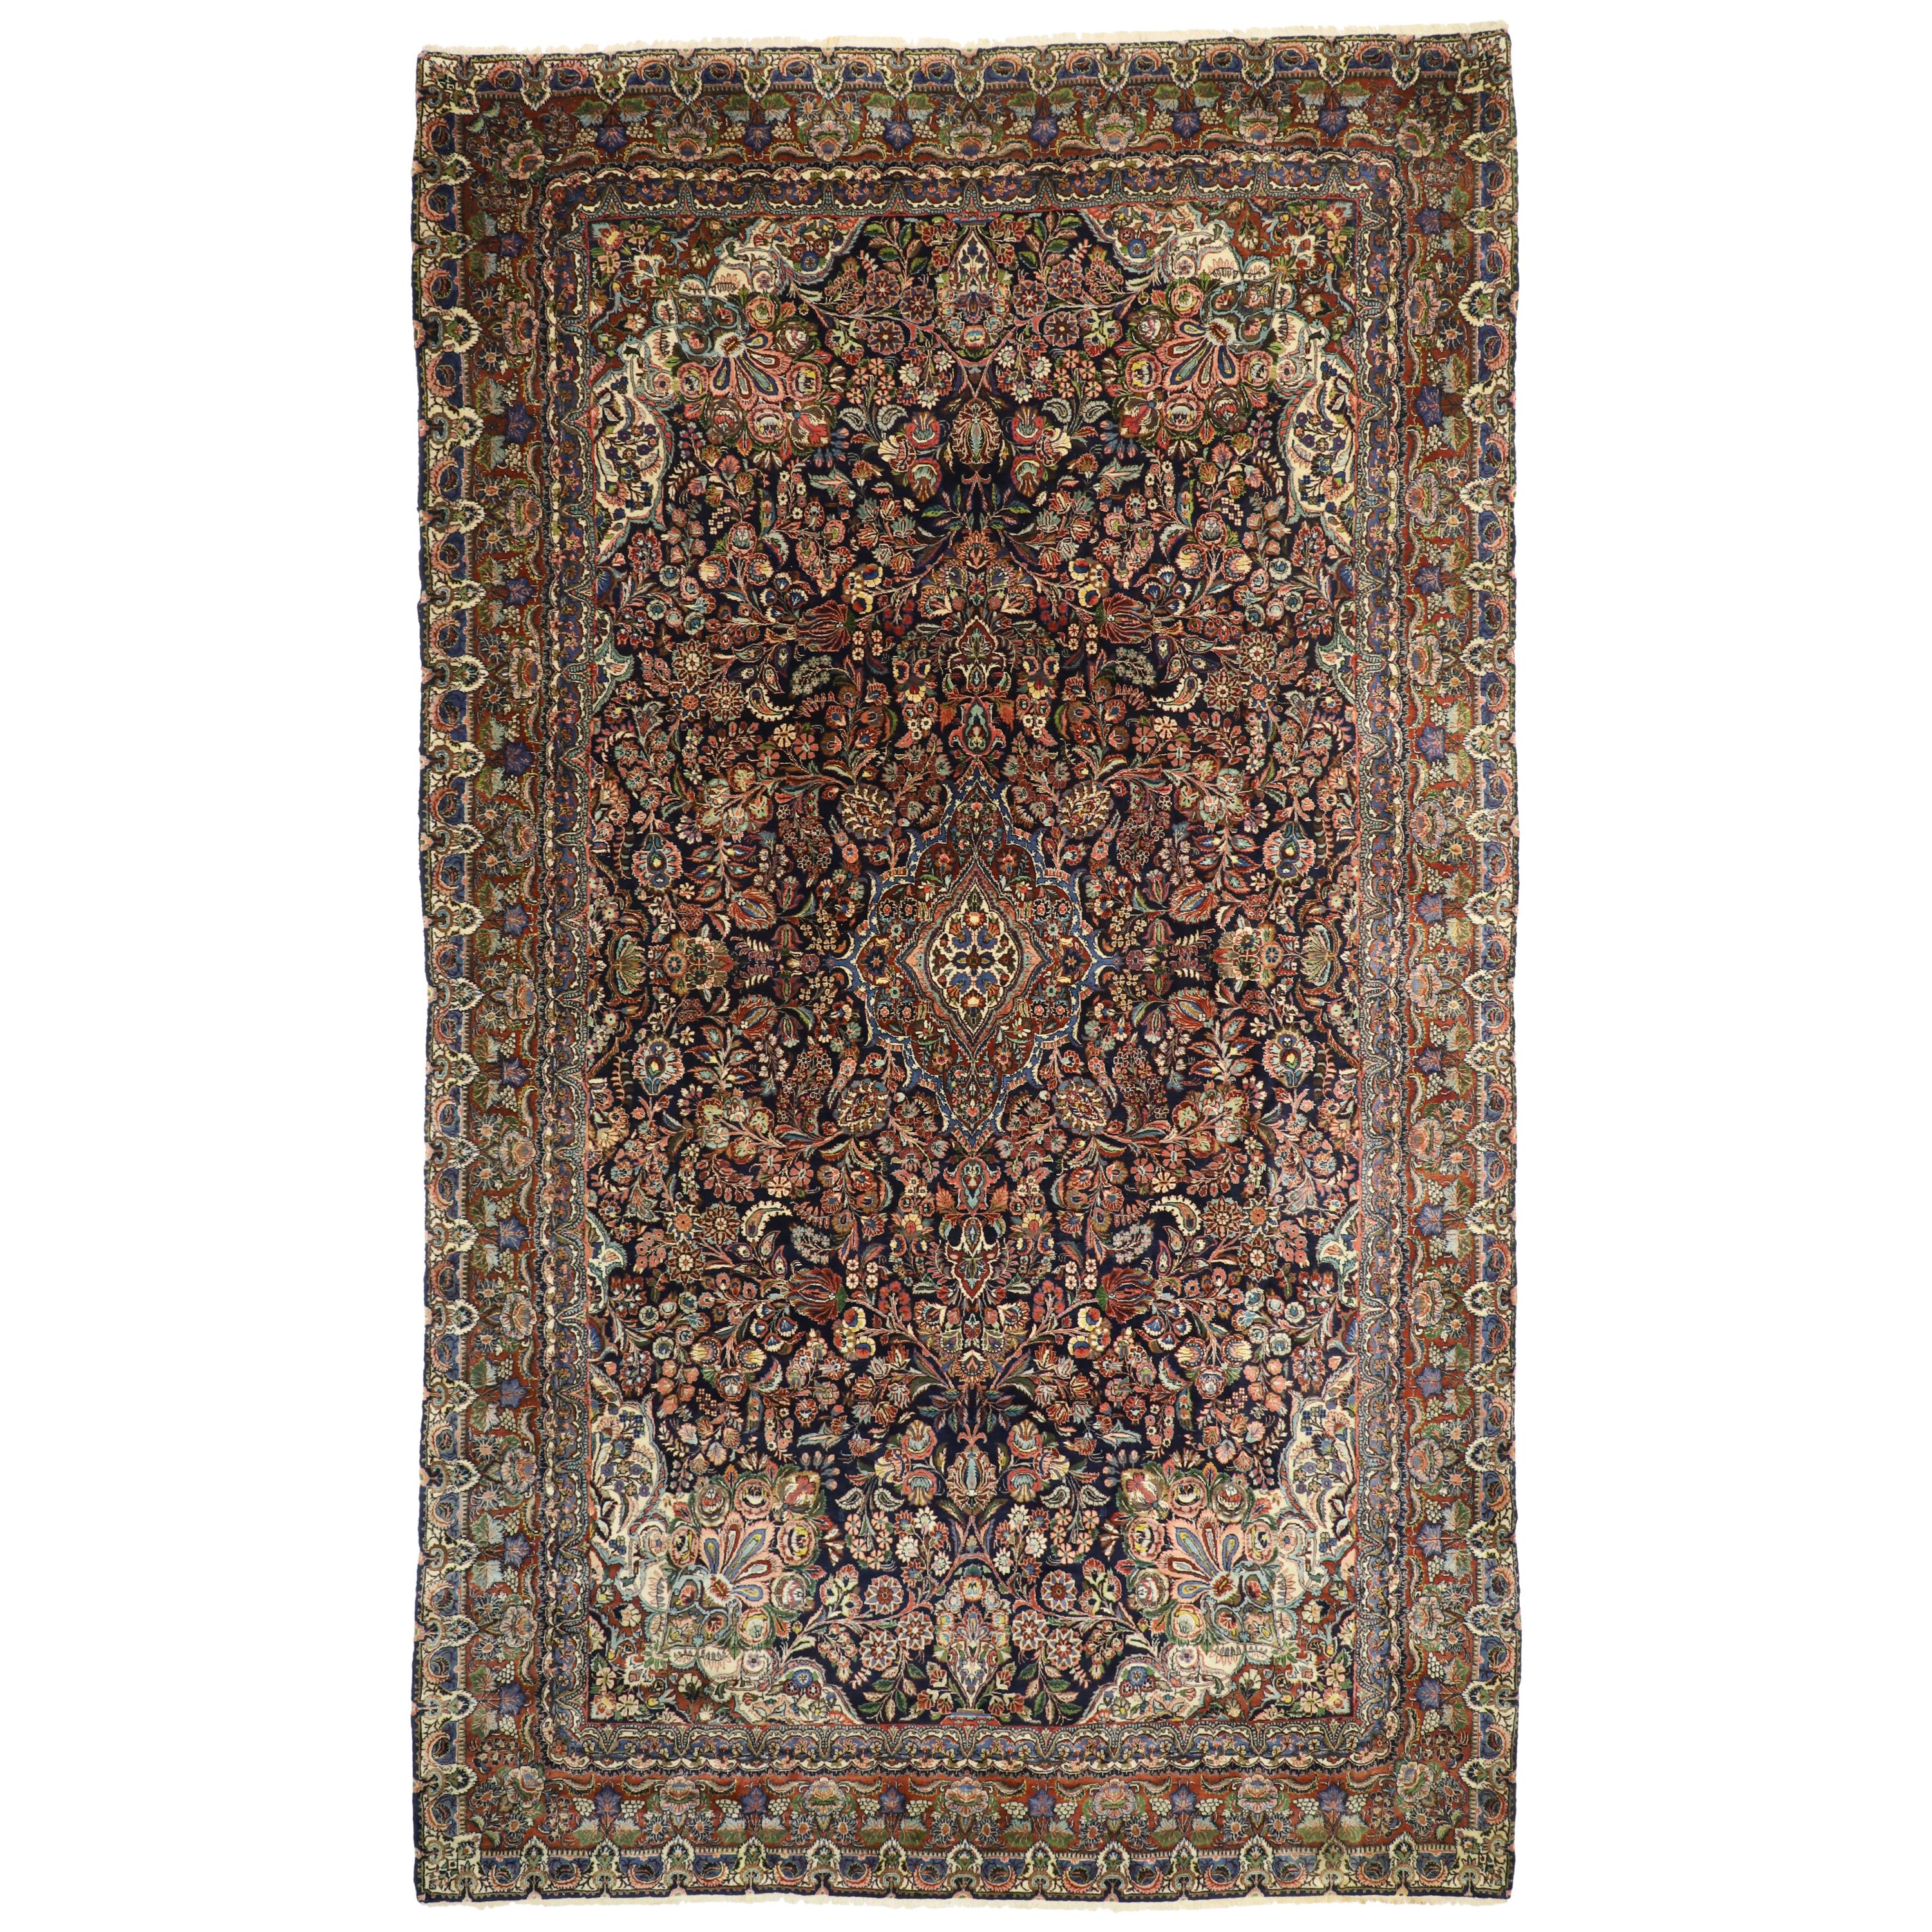 Oversized Antique Persian Hamadan Rug, Maximalism Meets Baroque Exuberance